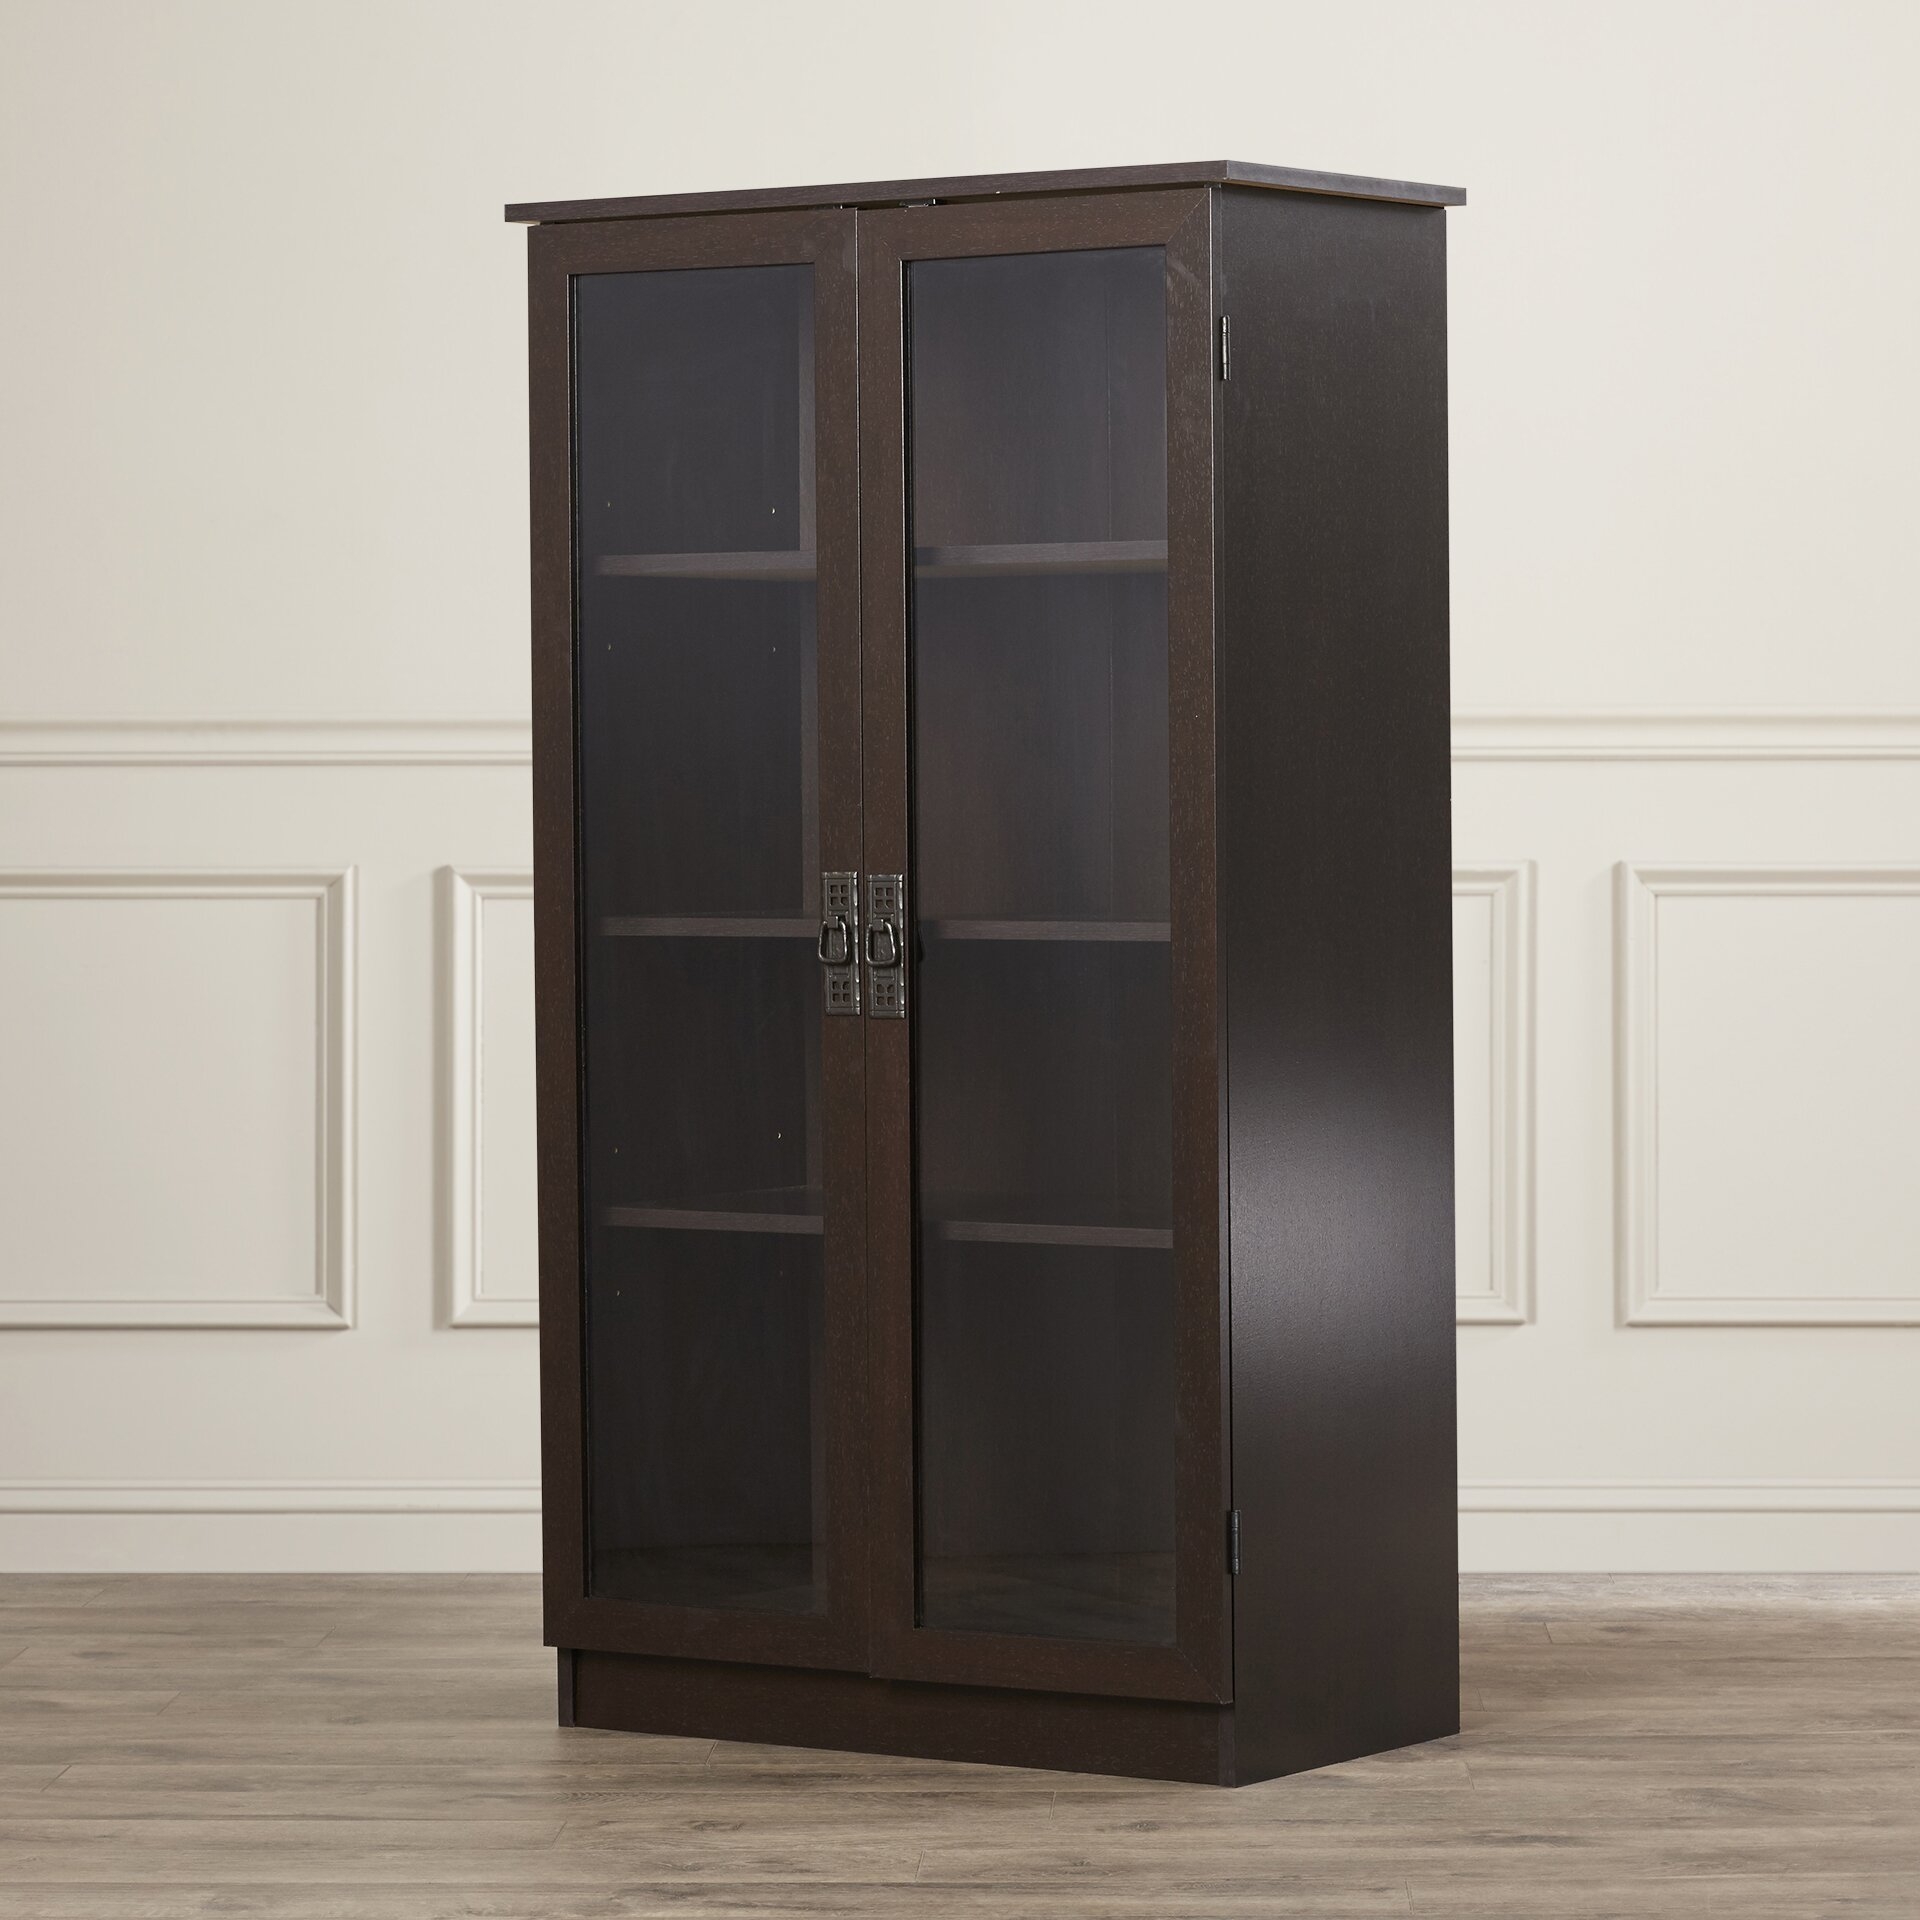 Bookcase With Glass Doors Visualhunt, Wayfair White Bookcase With Glass Doors